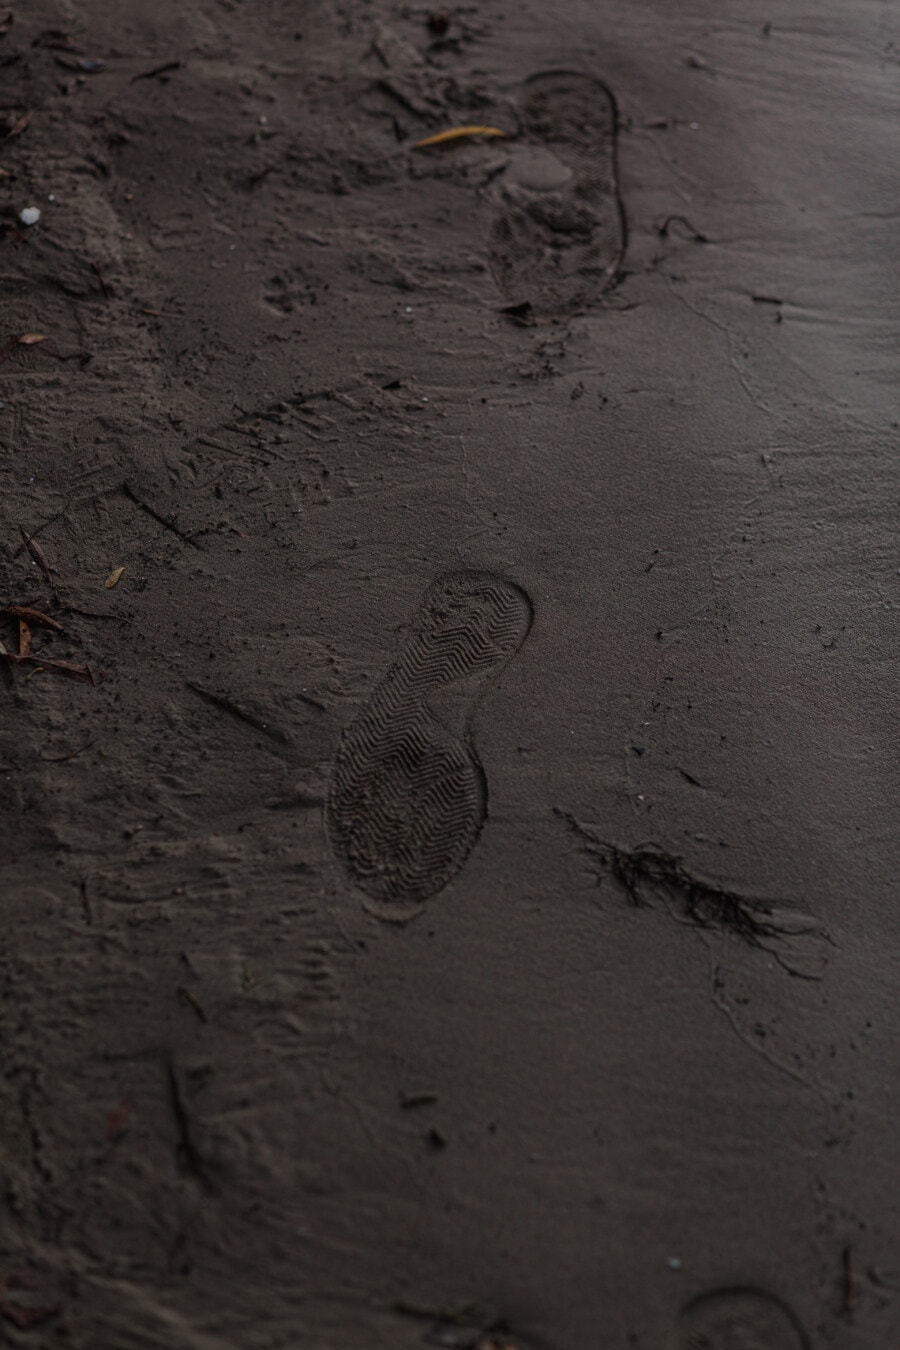 pijesak, mokro, korak, prljavi, tlo, plaža, zemlja, tekstura, tlo, otisak stopala